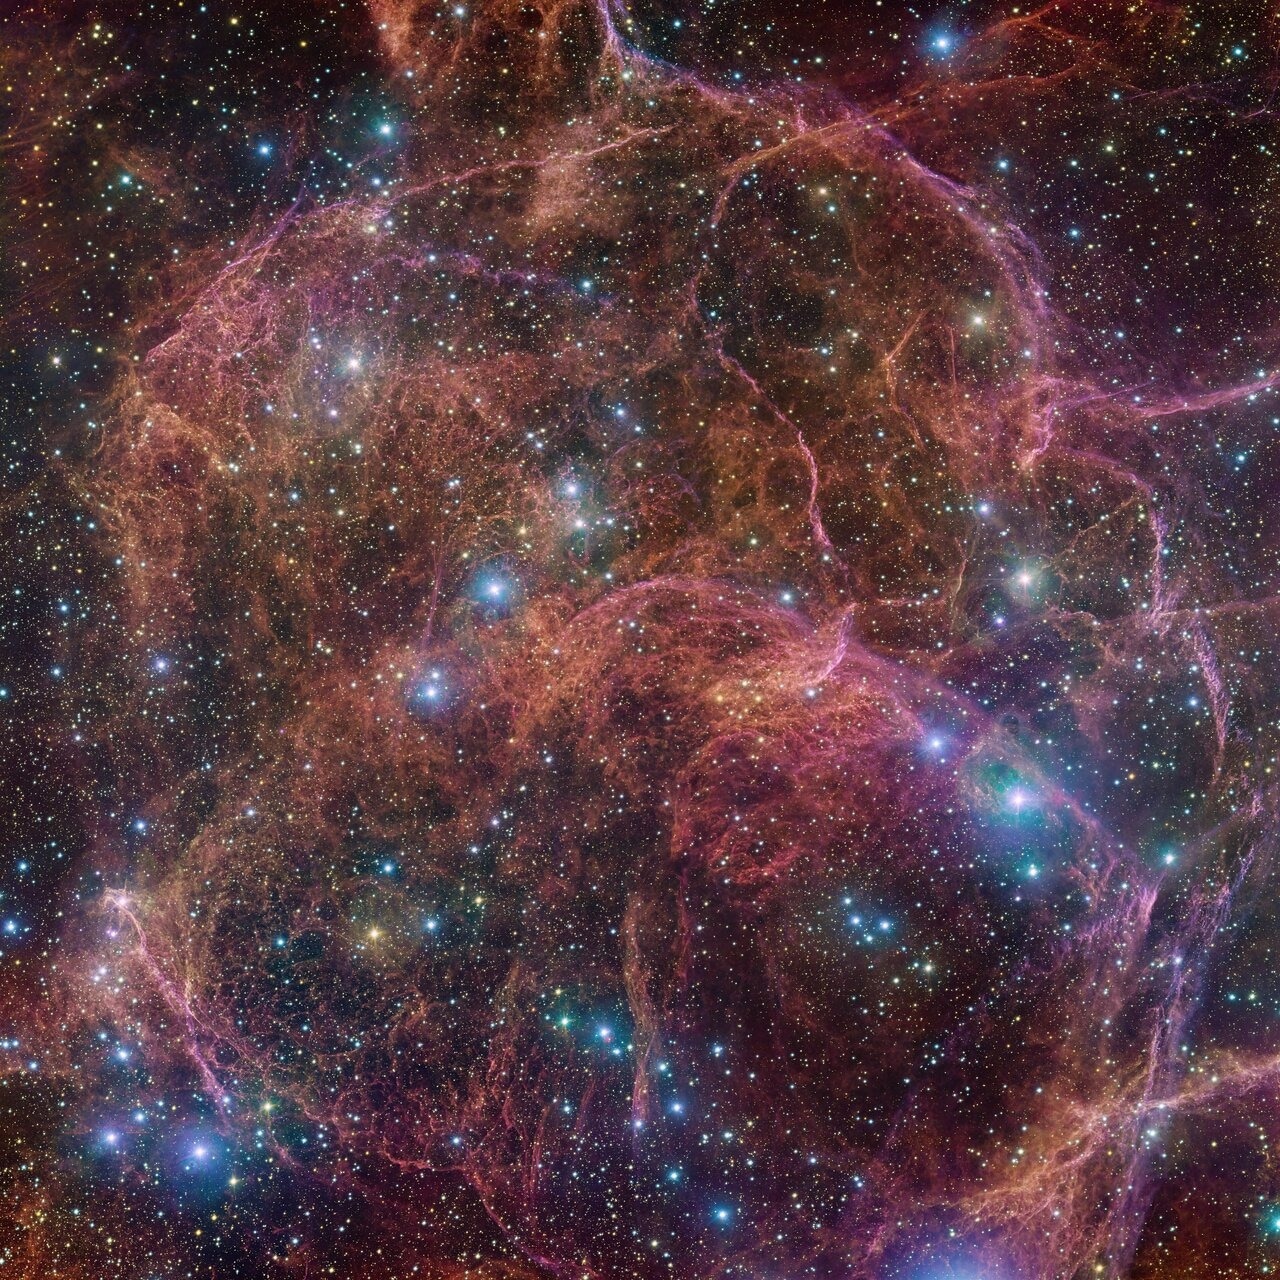 VLT Survey Telescope Images Remnants of the Vela Supernova